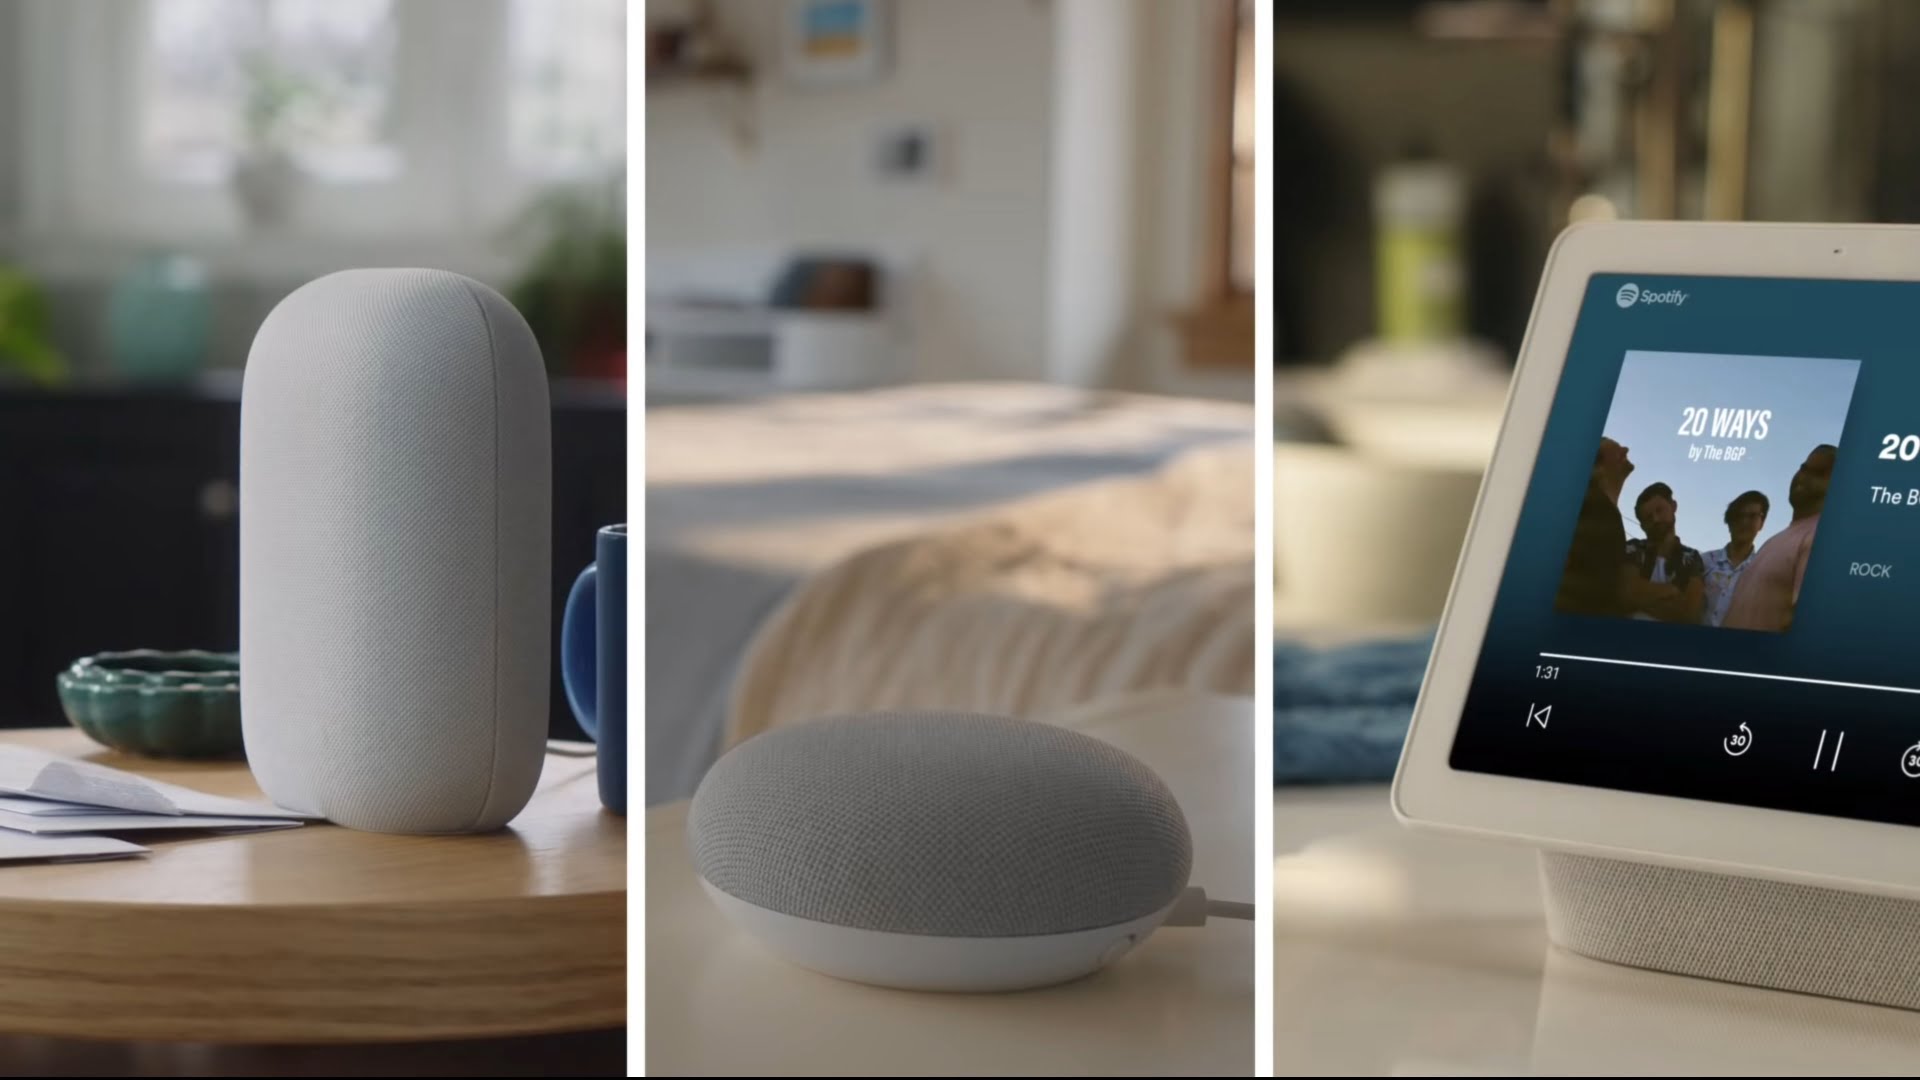 Patent infringement: Google Smart Speaker loses important feature